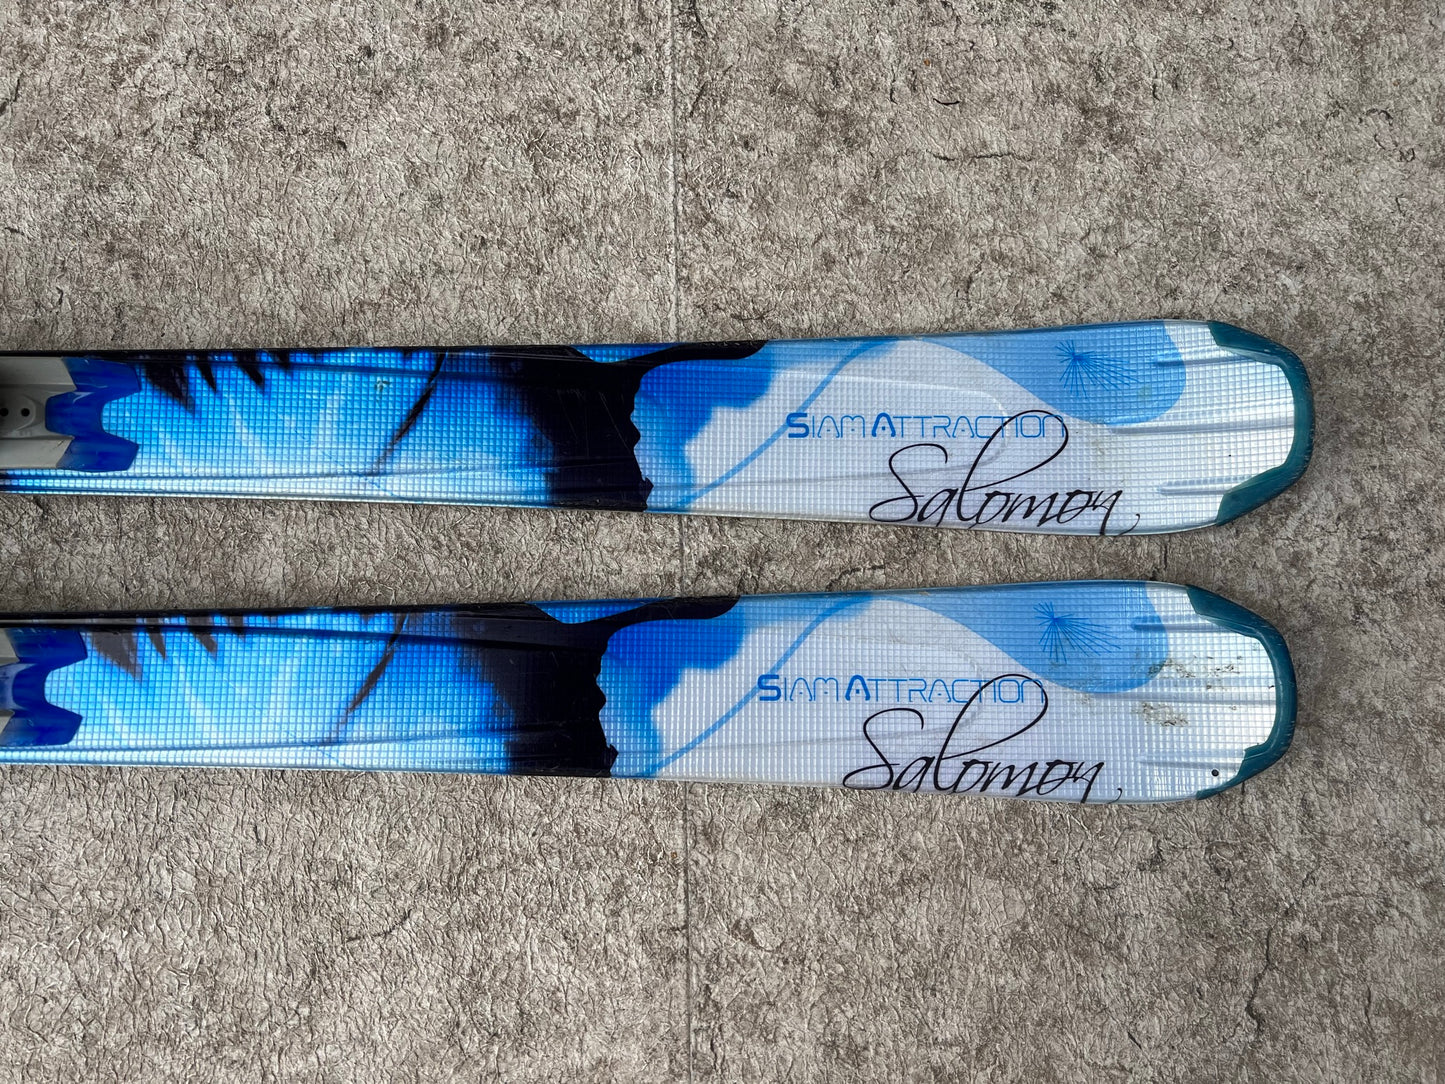 Ski 154 Salomon Sammatraction Blue Grey Silver Parabolic With Bindings Excellent